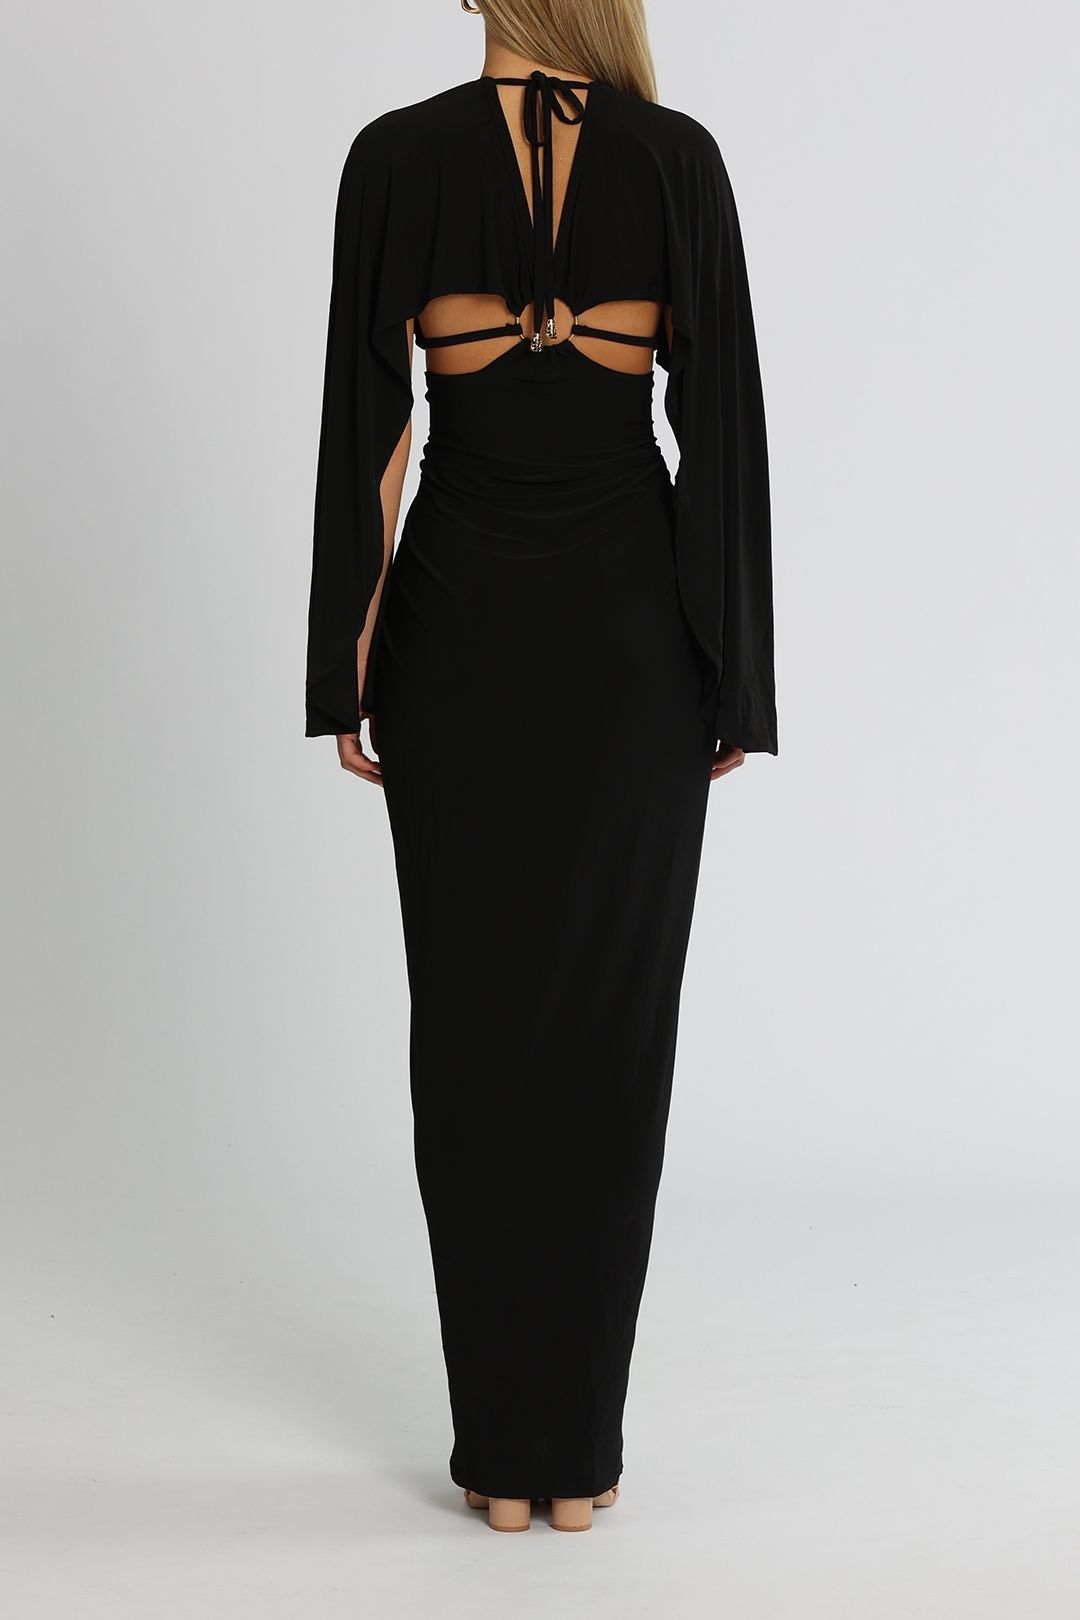 J. Angelique Selena Gown Black Sleeved